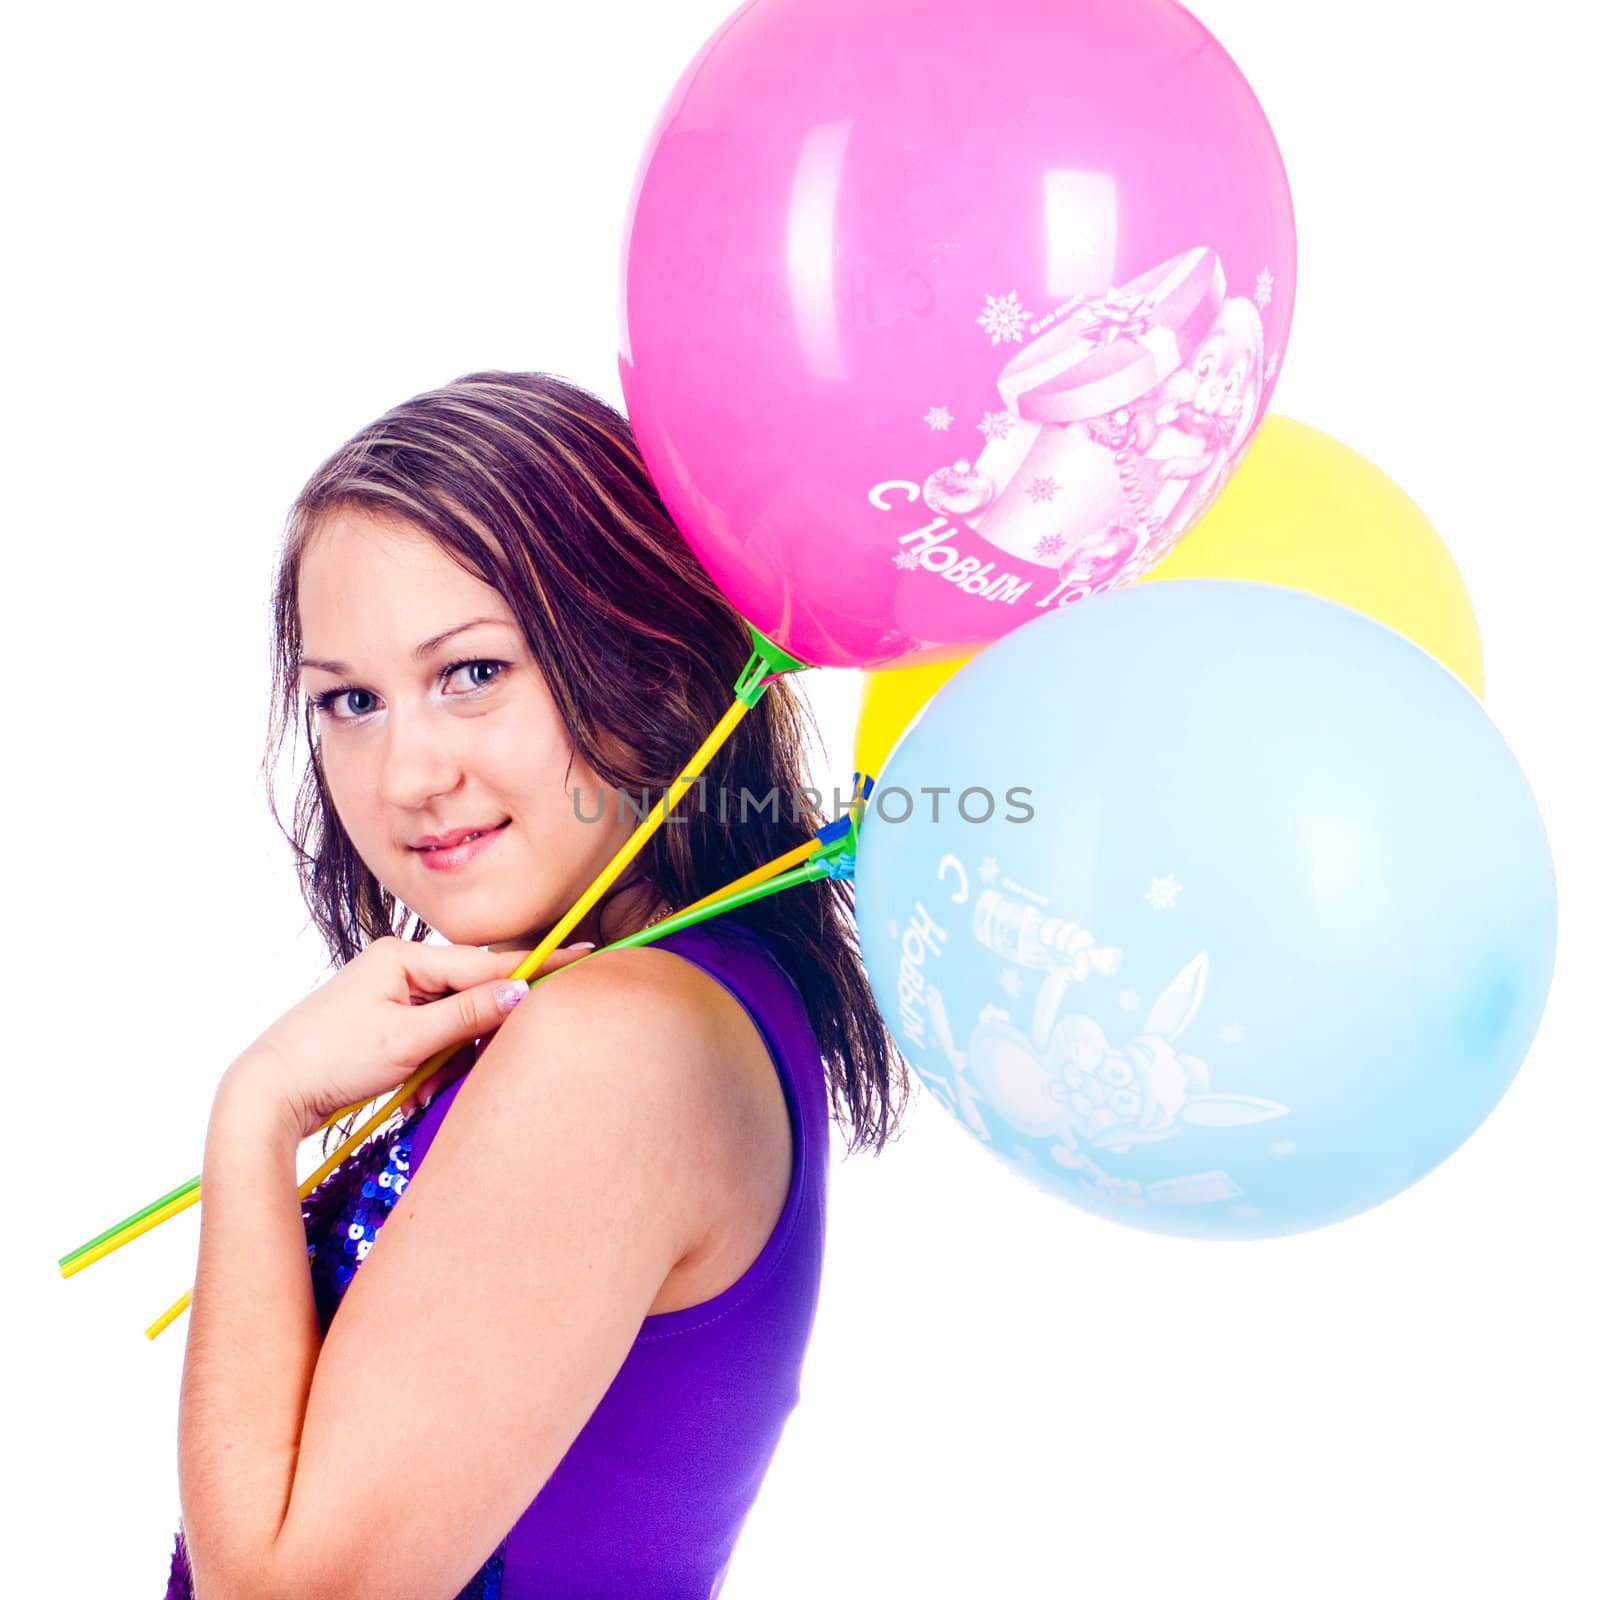 Woman with ballons by malishpsih